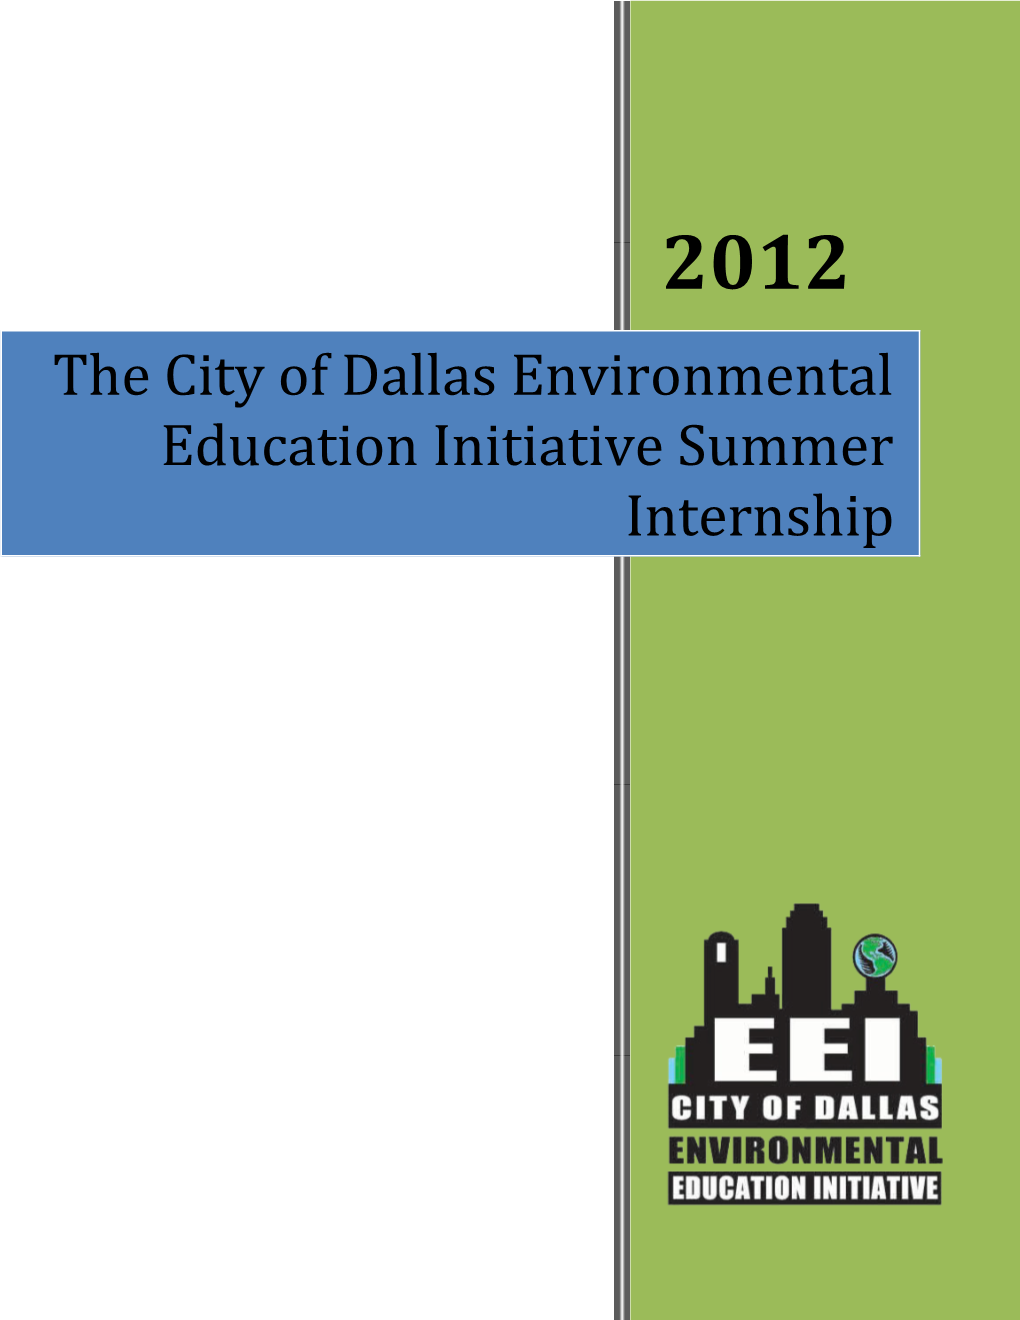 The City of Dallas Environmental Education Initiative Summer Internship